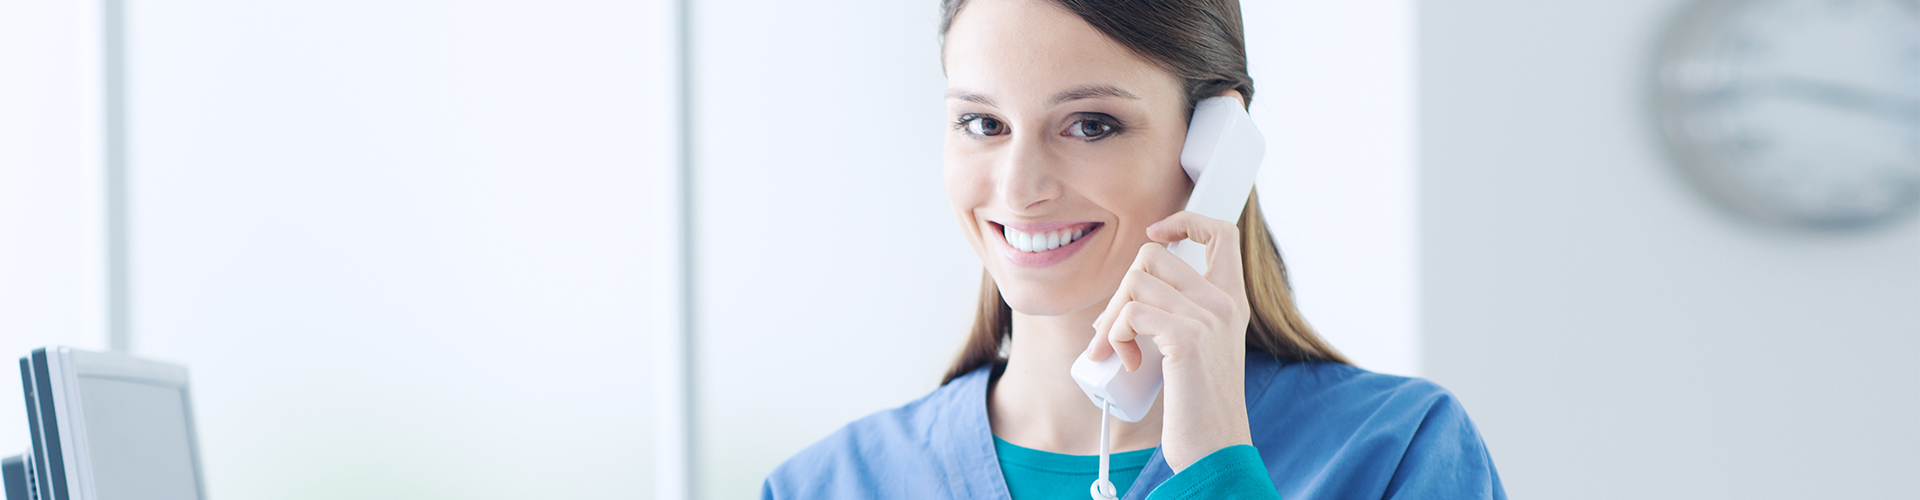 nurse on the phone smiling